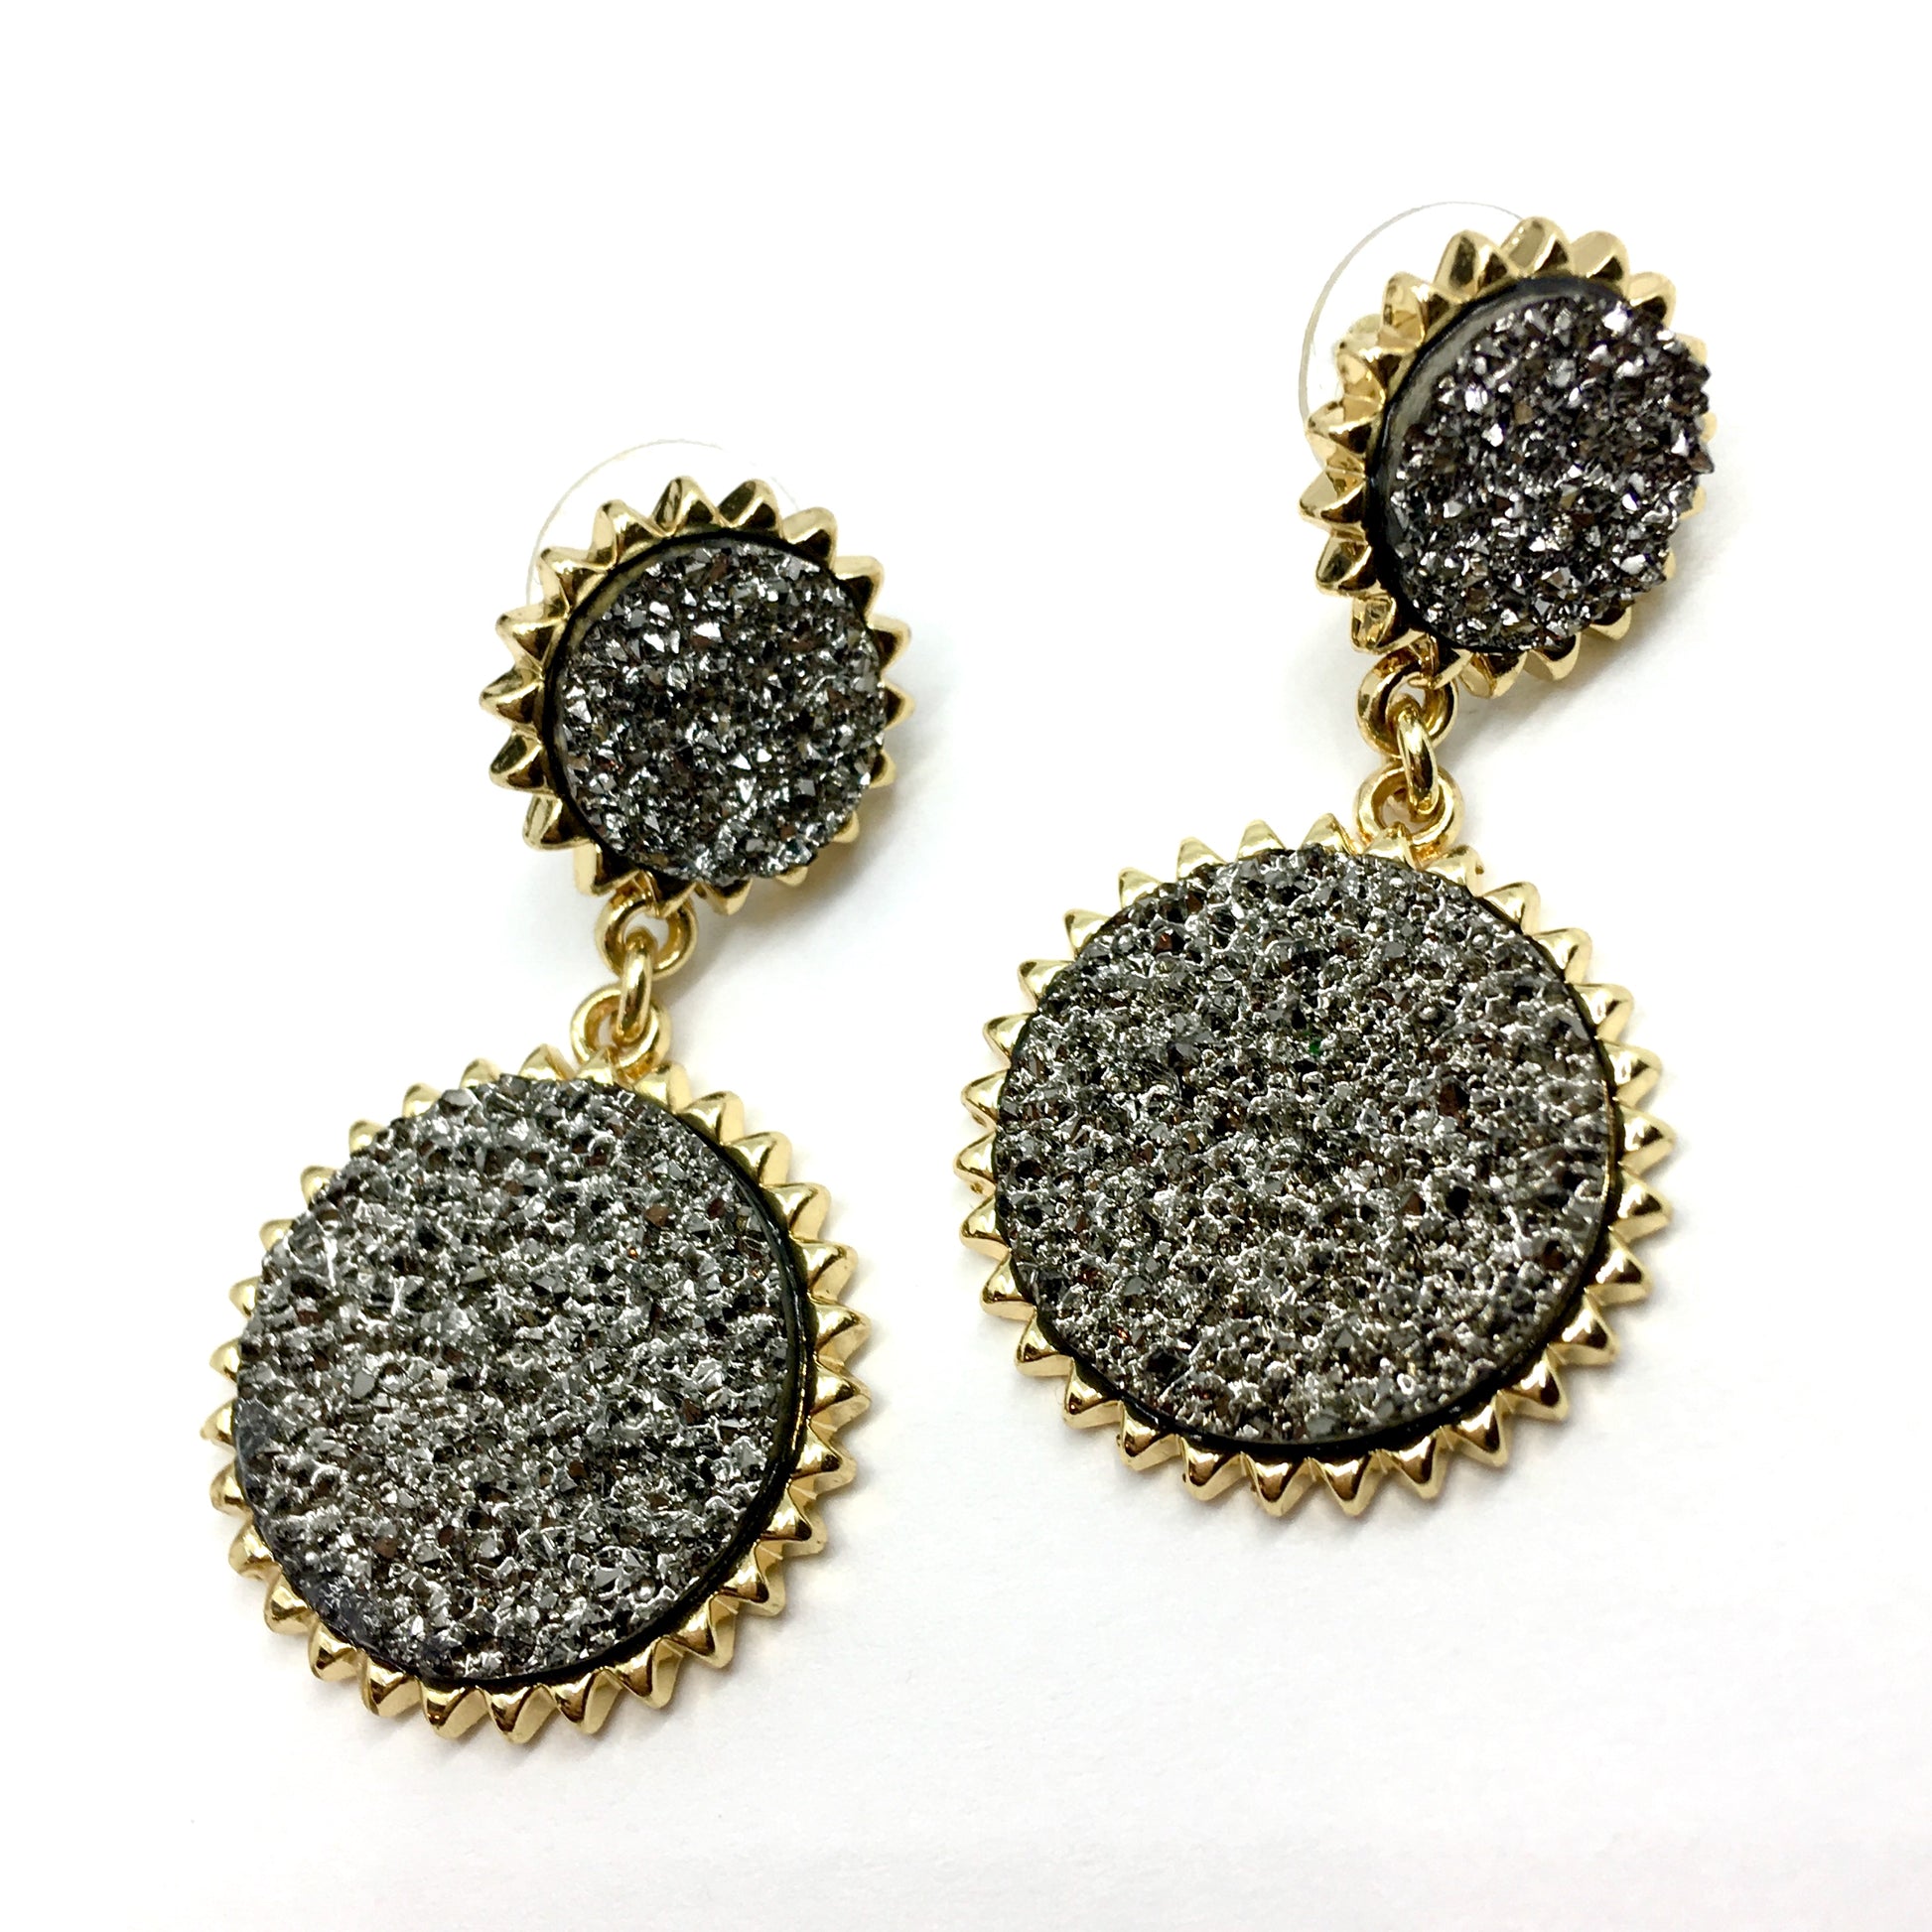 Fashion Jewelry - Edgy Flair Gold Black Druzy Circle Design Dangle Earrings